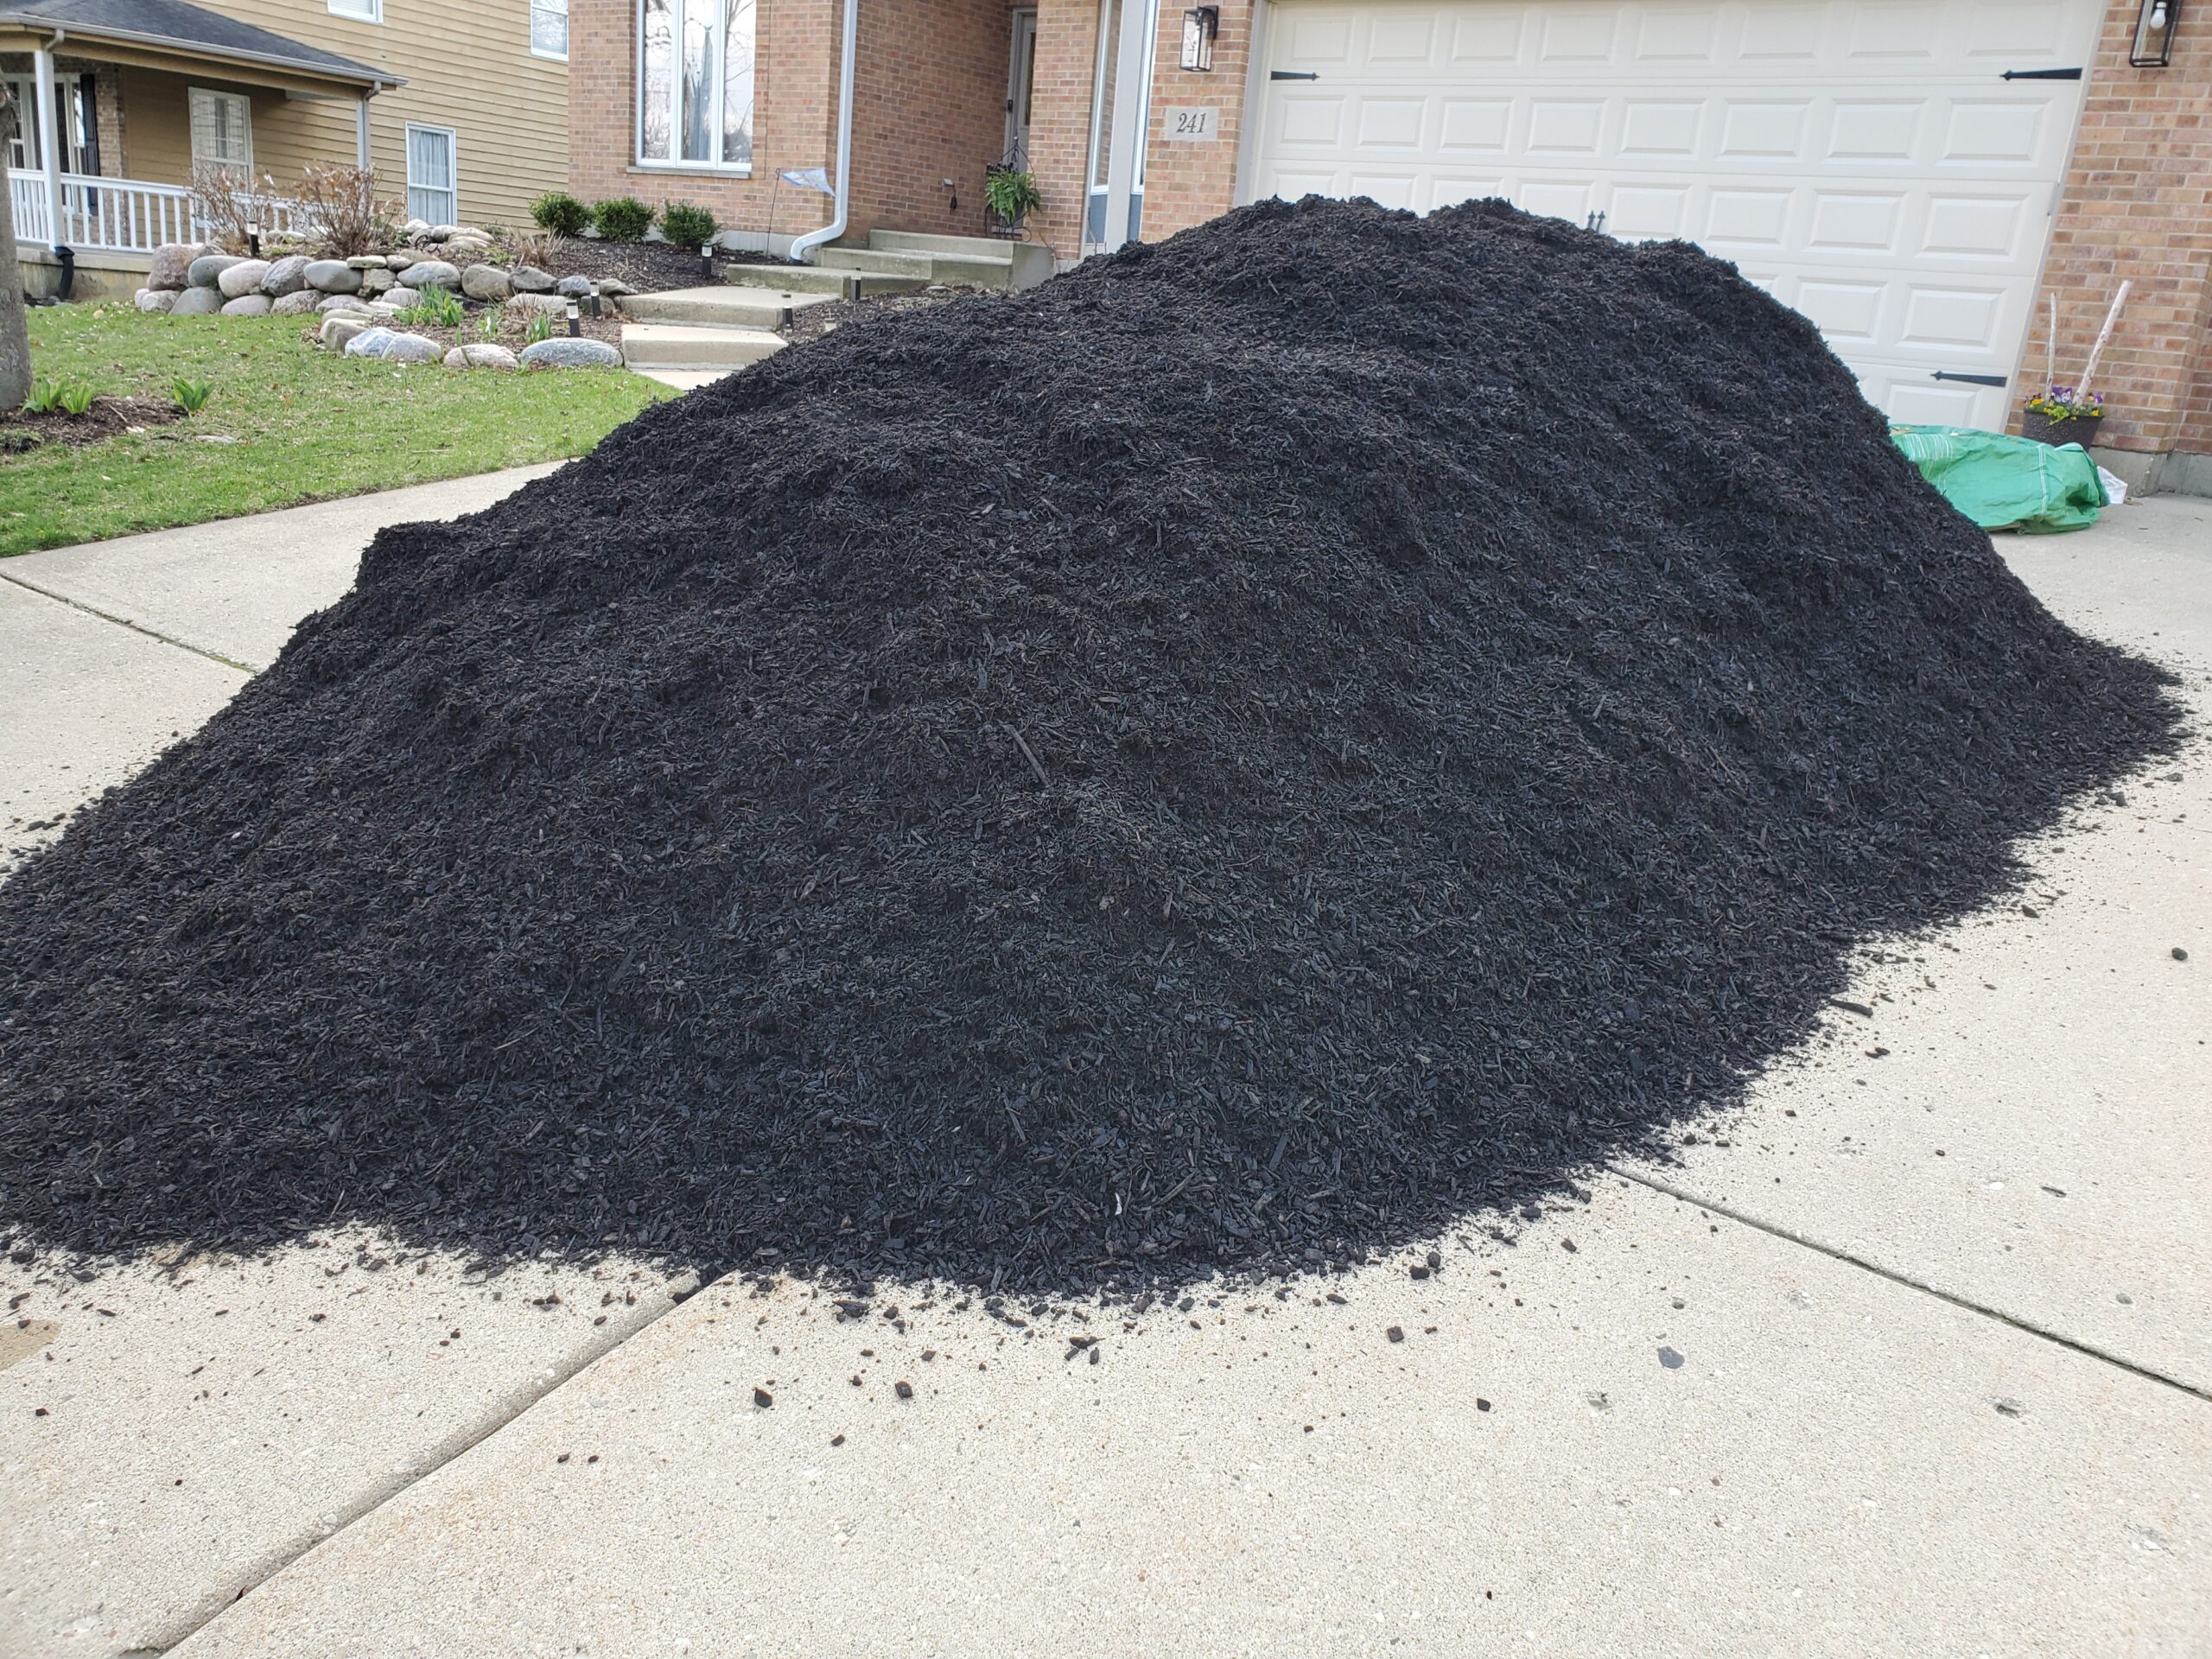 Image of Pile of black bark mulch